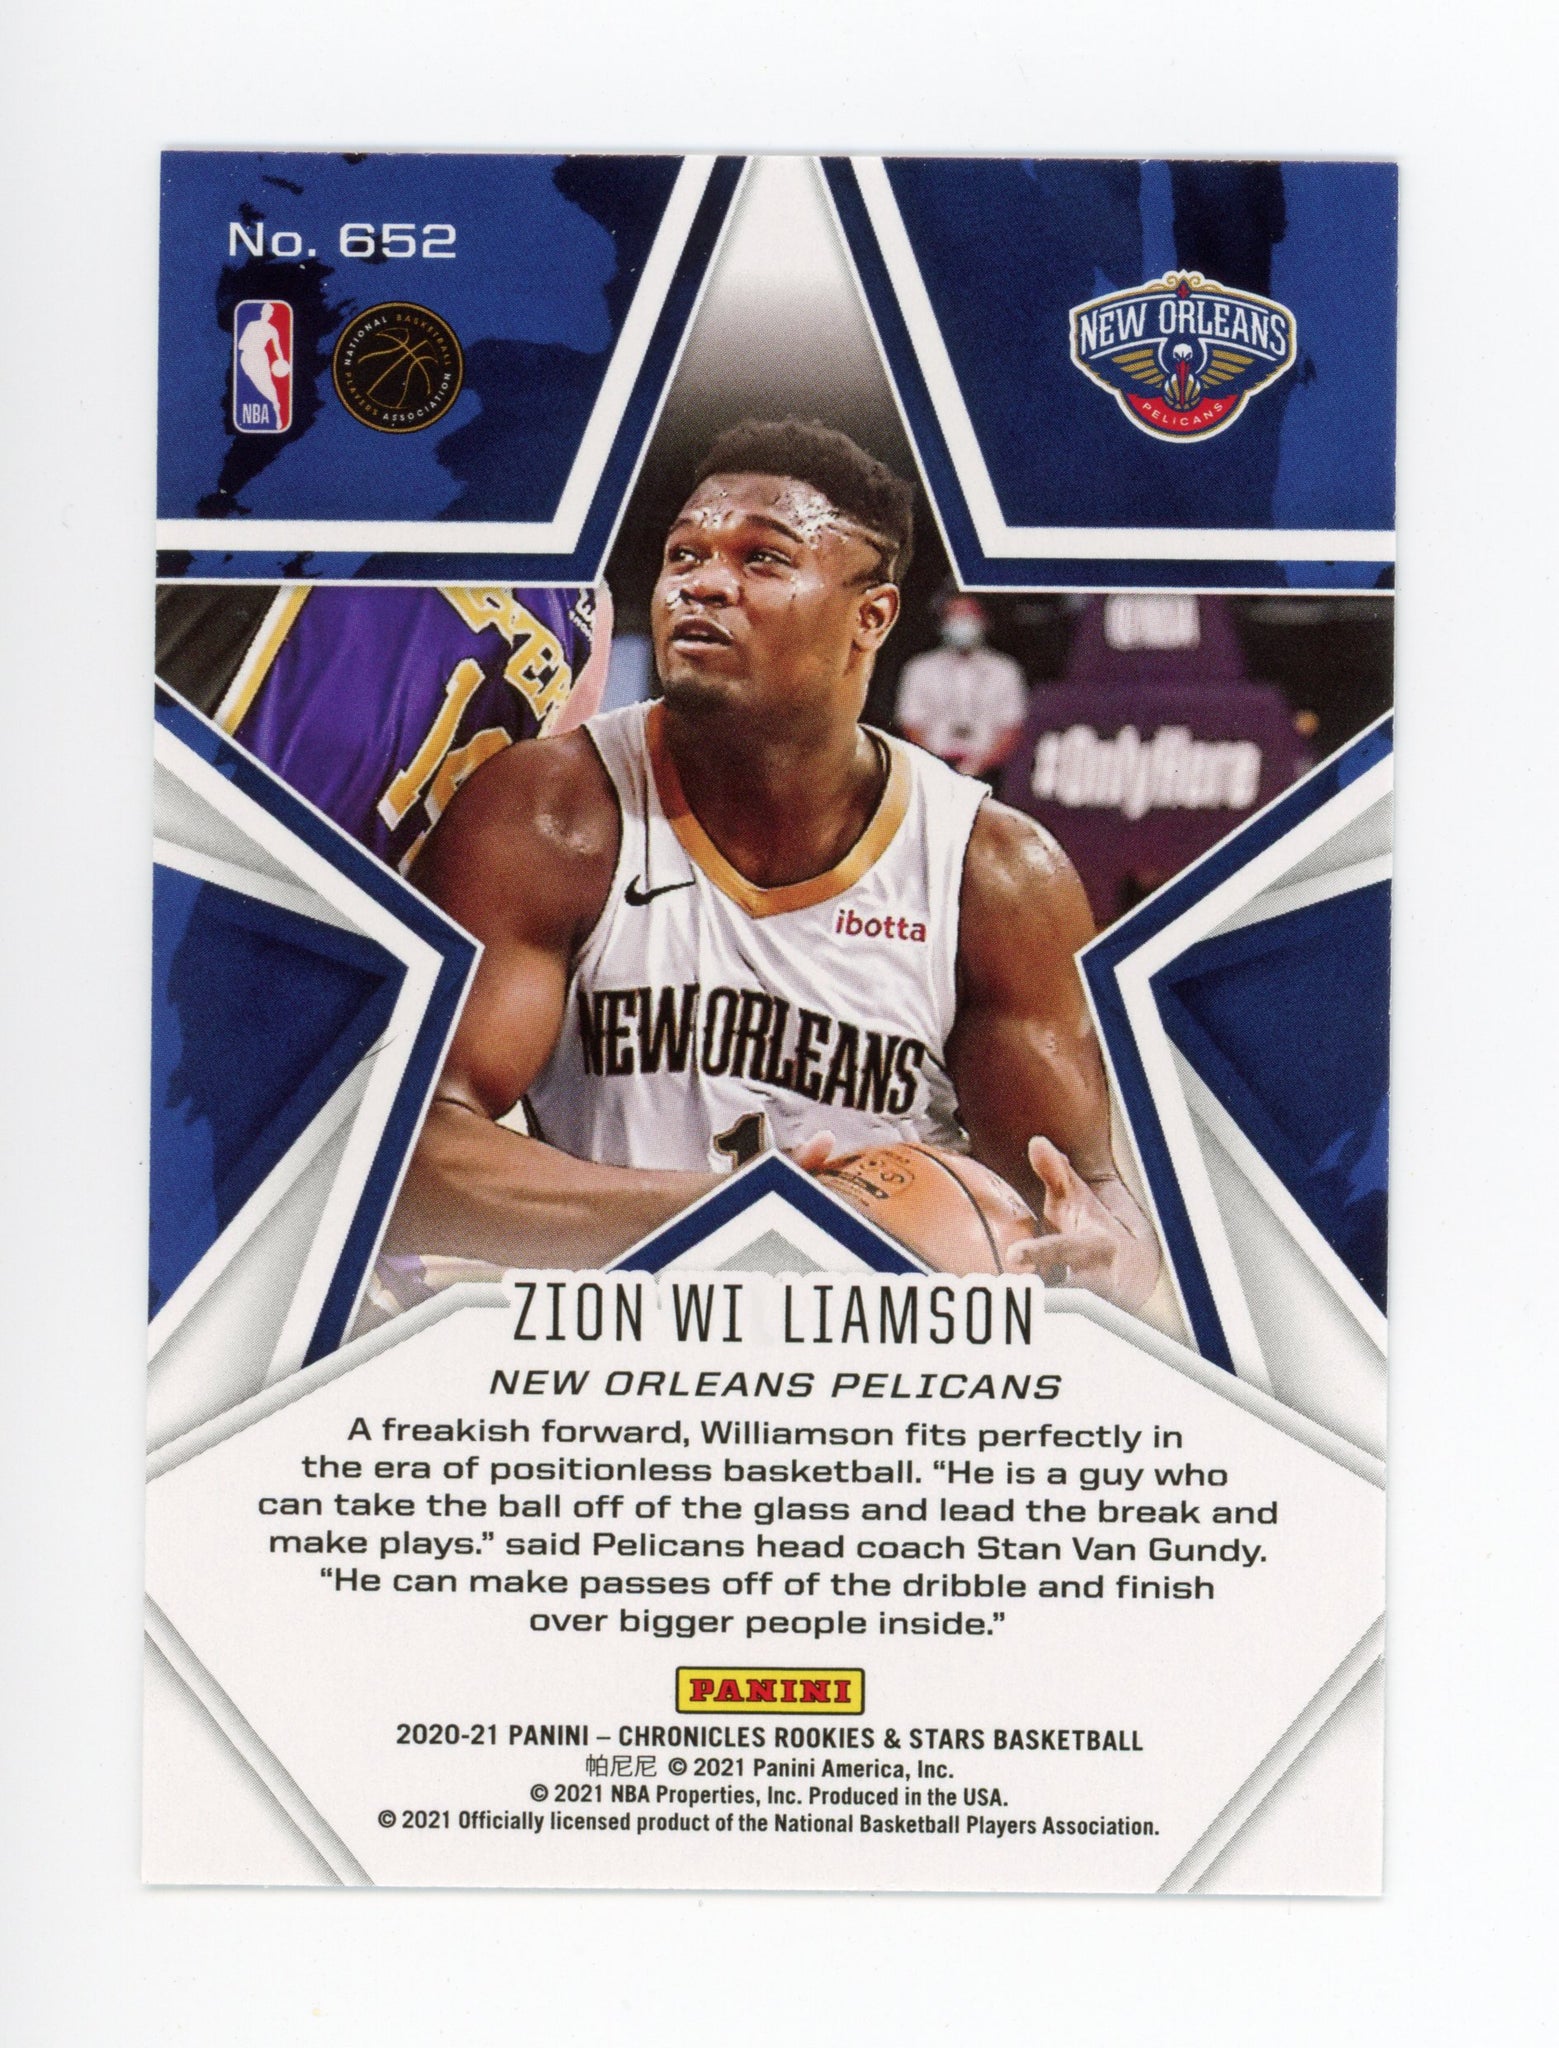 2020-2021 Zion Williamson Rookies & Stars Panini New Orleans Pelicans # 652